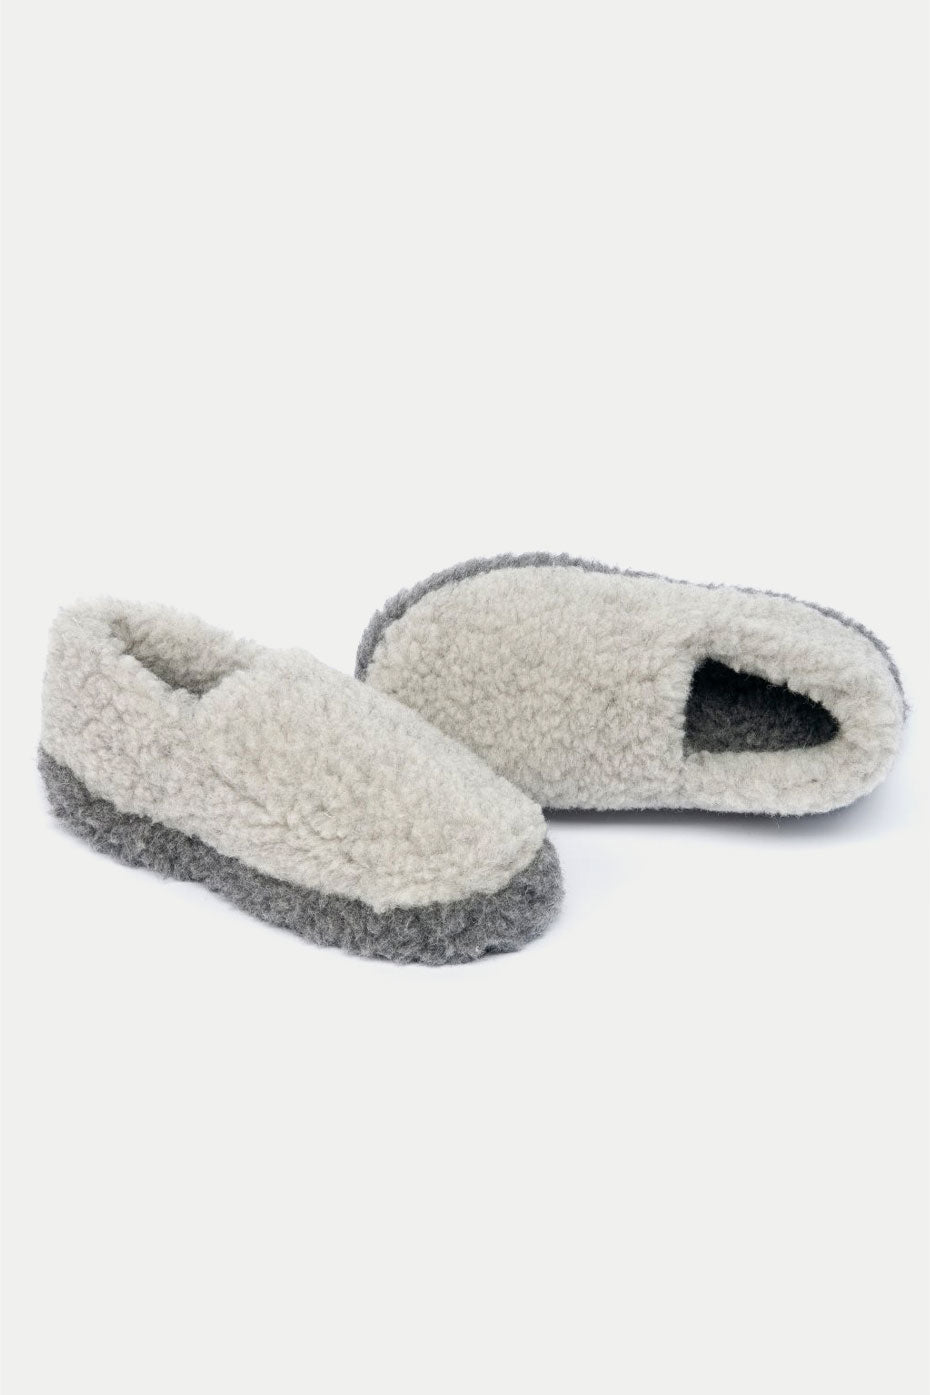 yoko-wool-siberian-two-tone-grey-slippers-mens